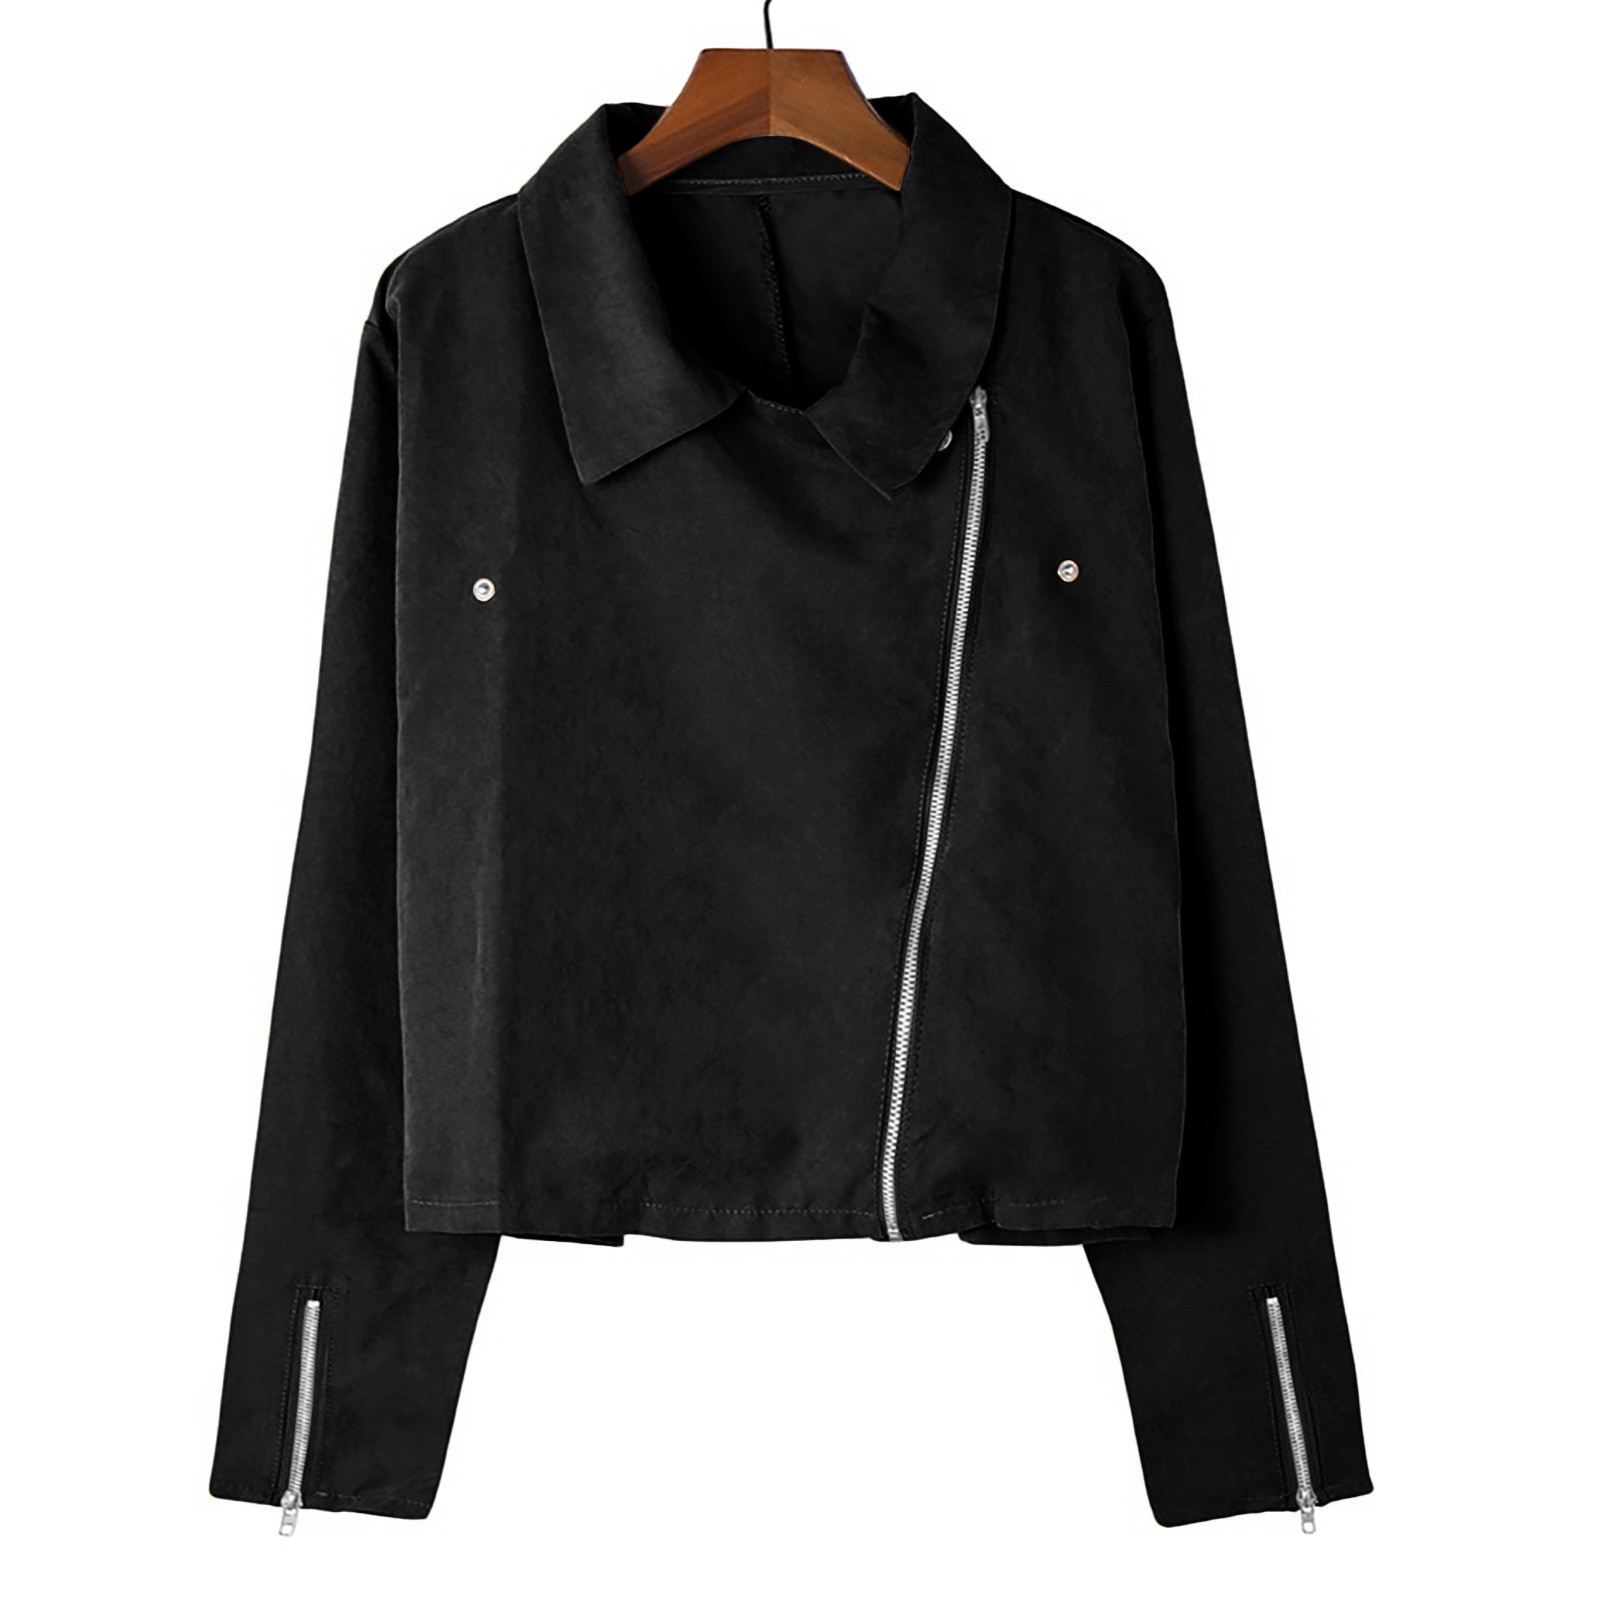 Leather Jacket for Women Fashion Leather Motorcycle Jacket Plus Size Faux Leather Tops Lightweight Short Jacket Coat - image 4 of 8